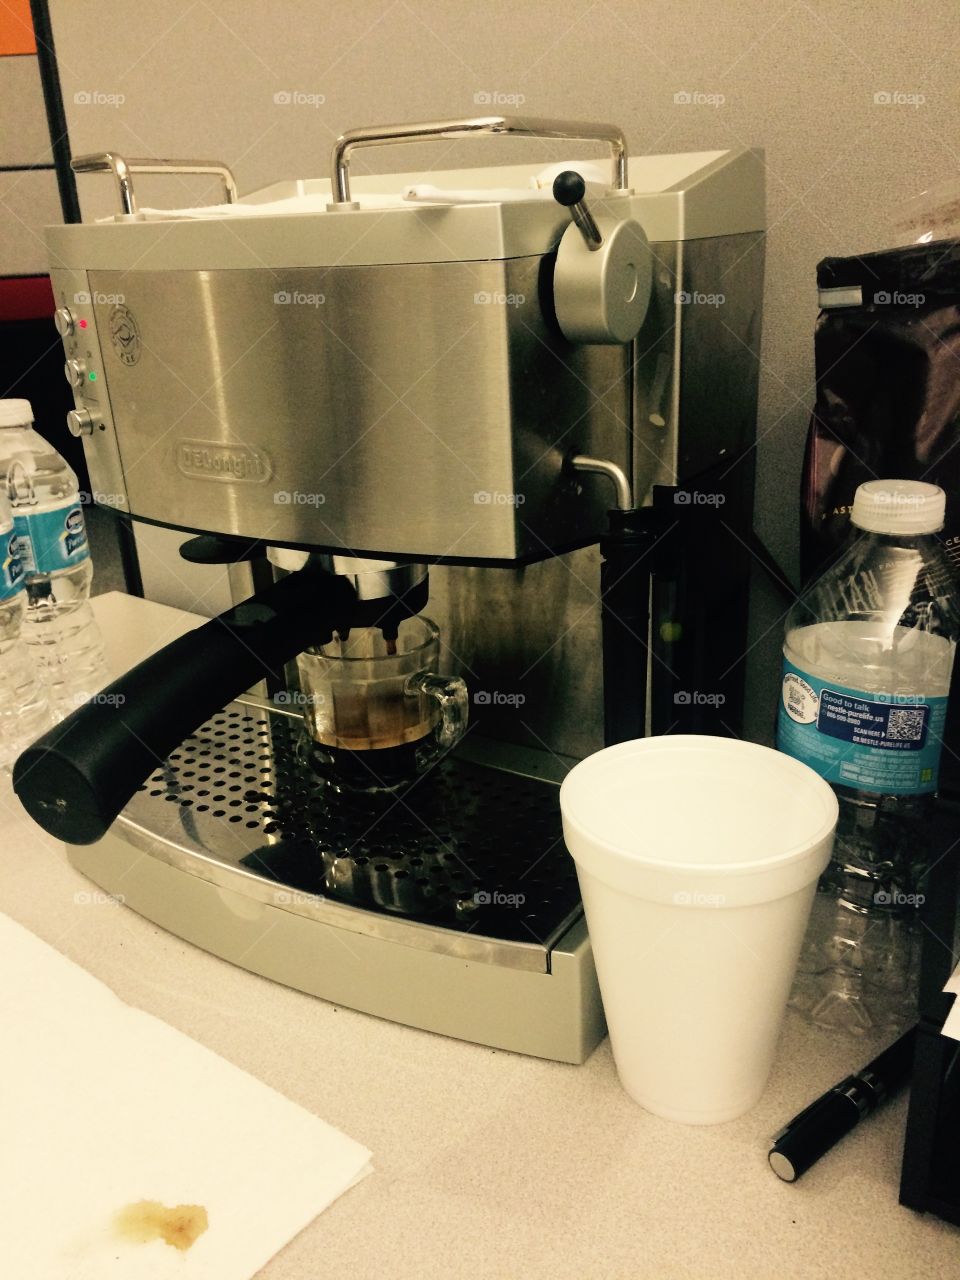 Espresso. Coffee, espresso at work. Afternoon boost